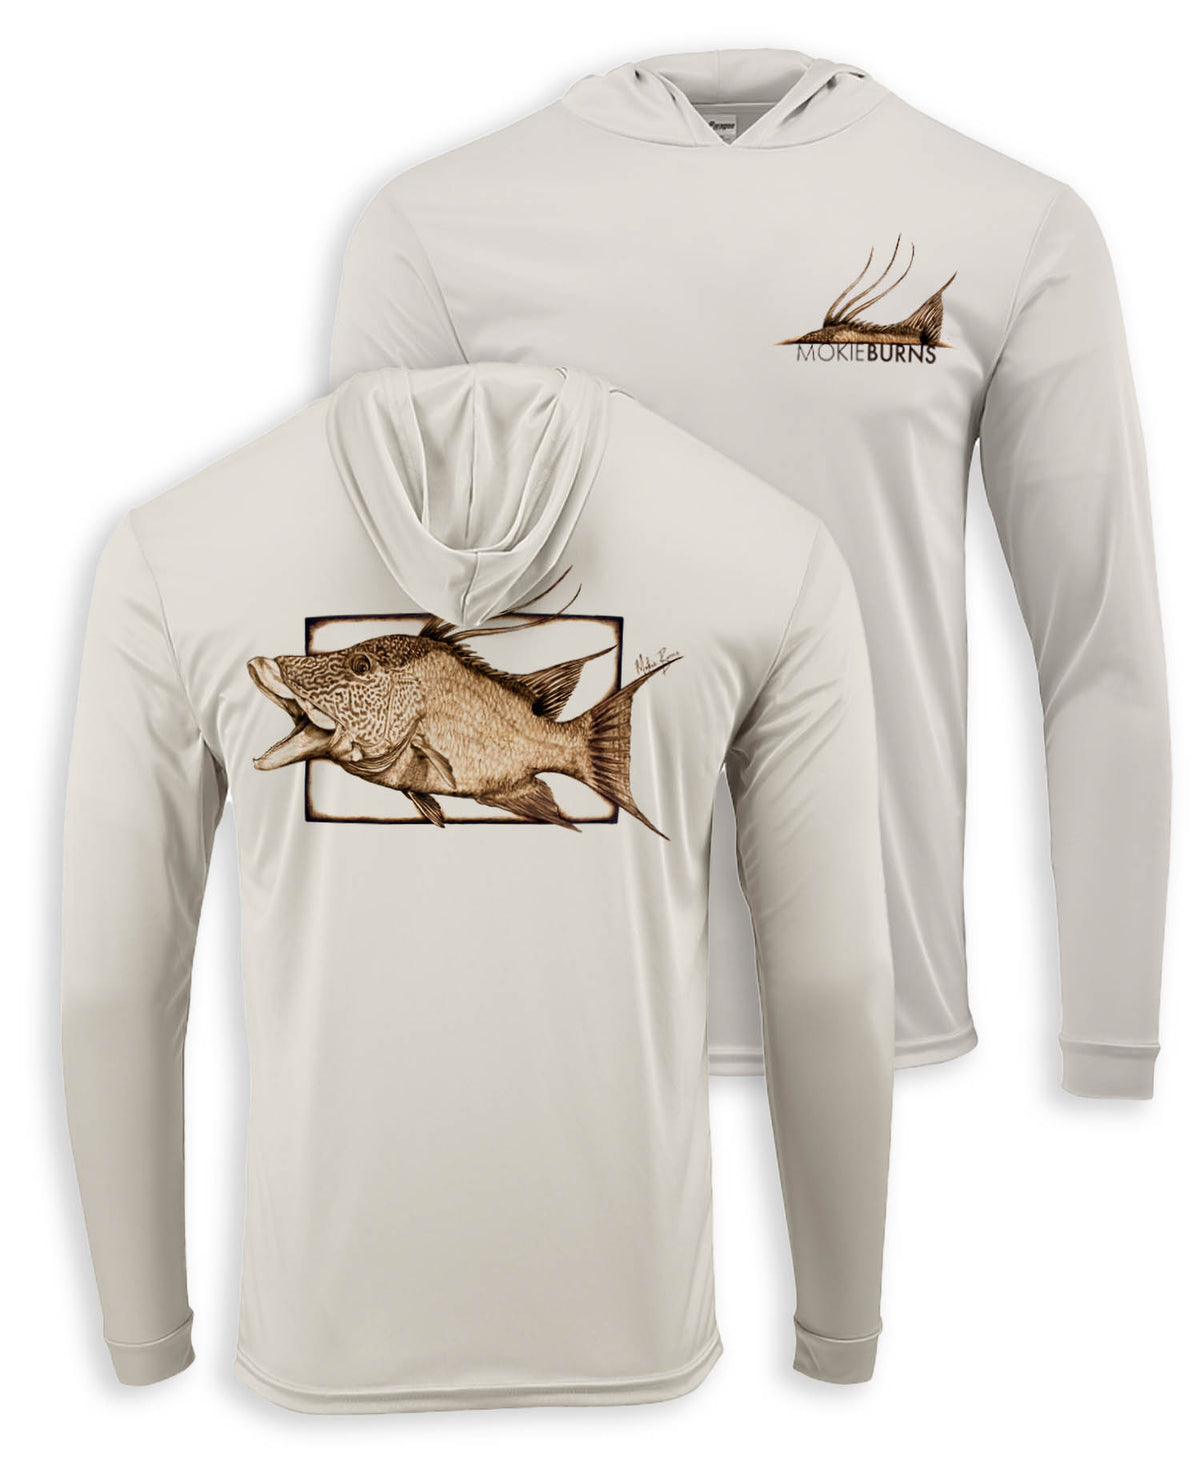 Unisex Hoodie Performance Fishing Shirt - Hogfish